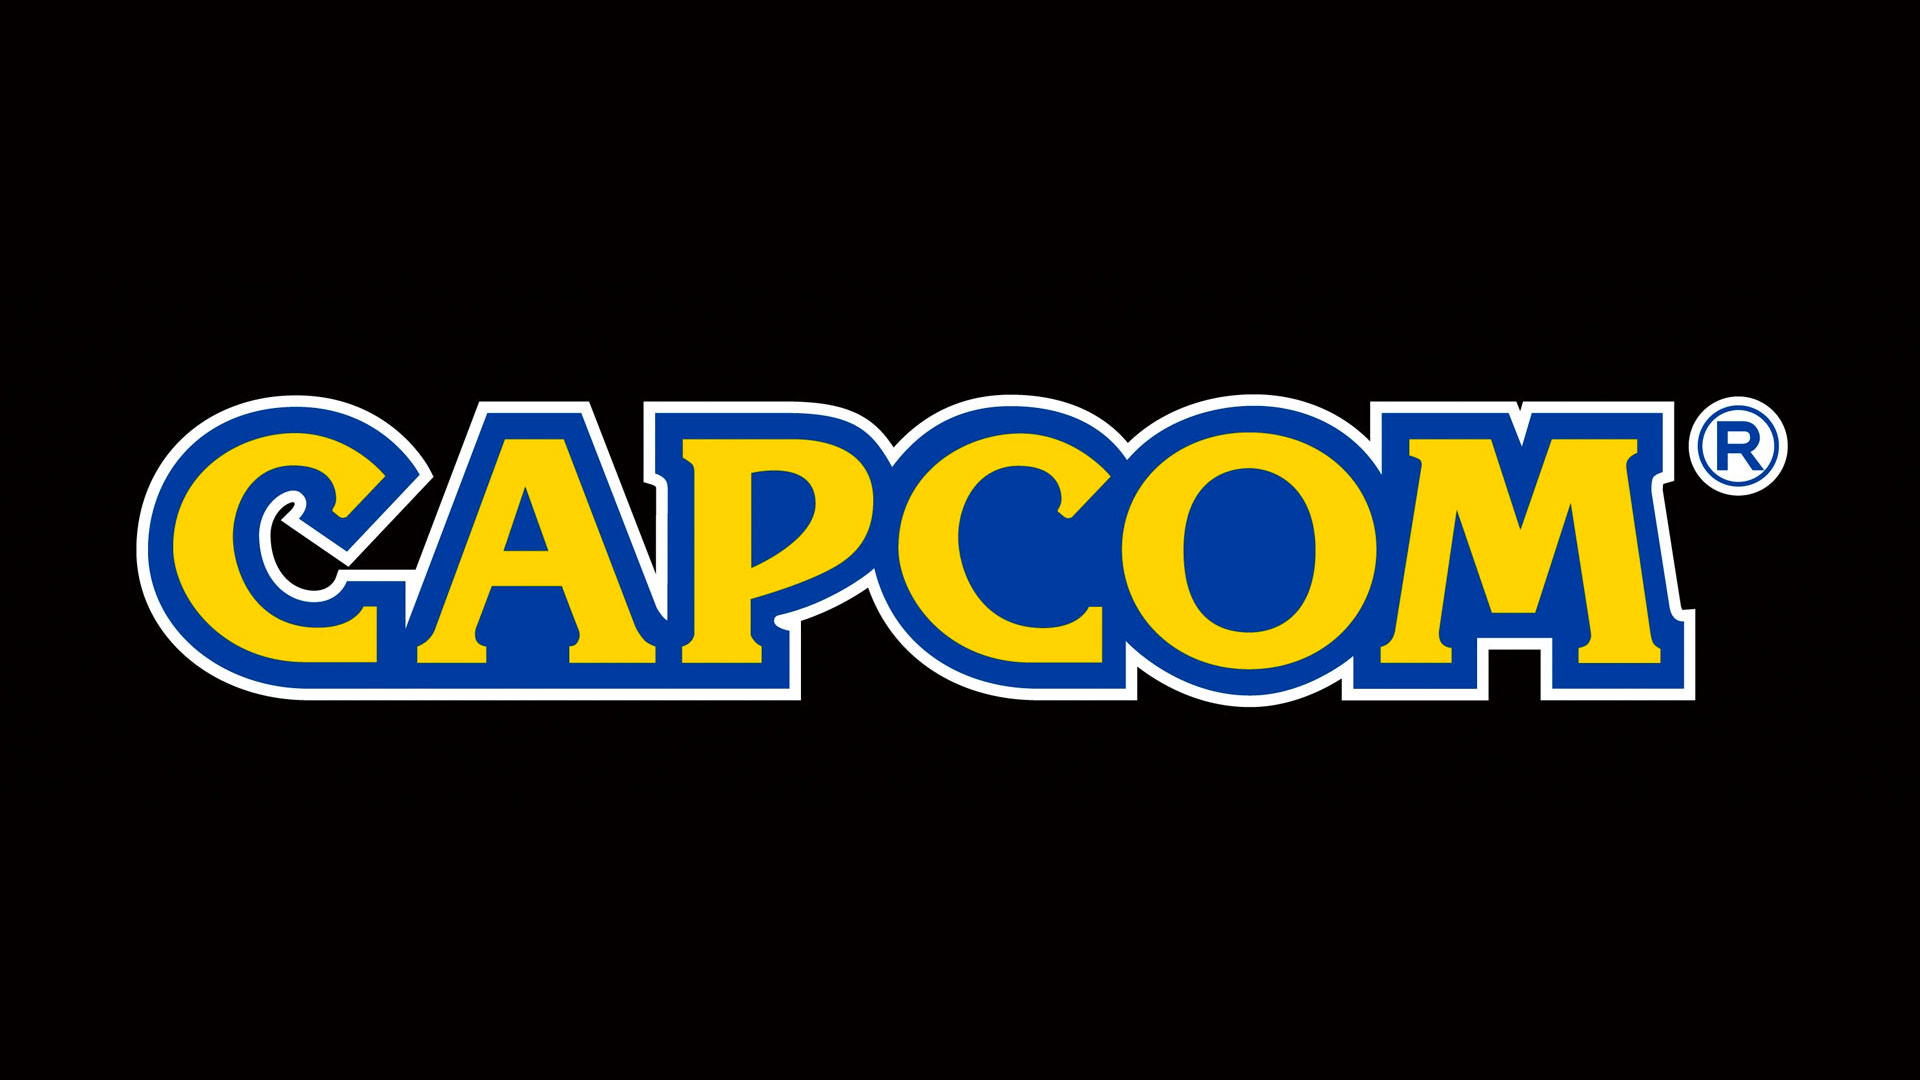 Capcom แฮปปี้! มียอดขายซอฟต์แวร์สูงที่สุดในปีงบประมาณ 22/23